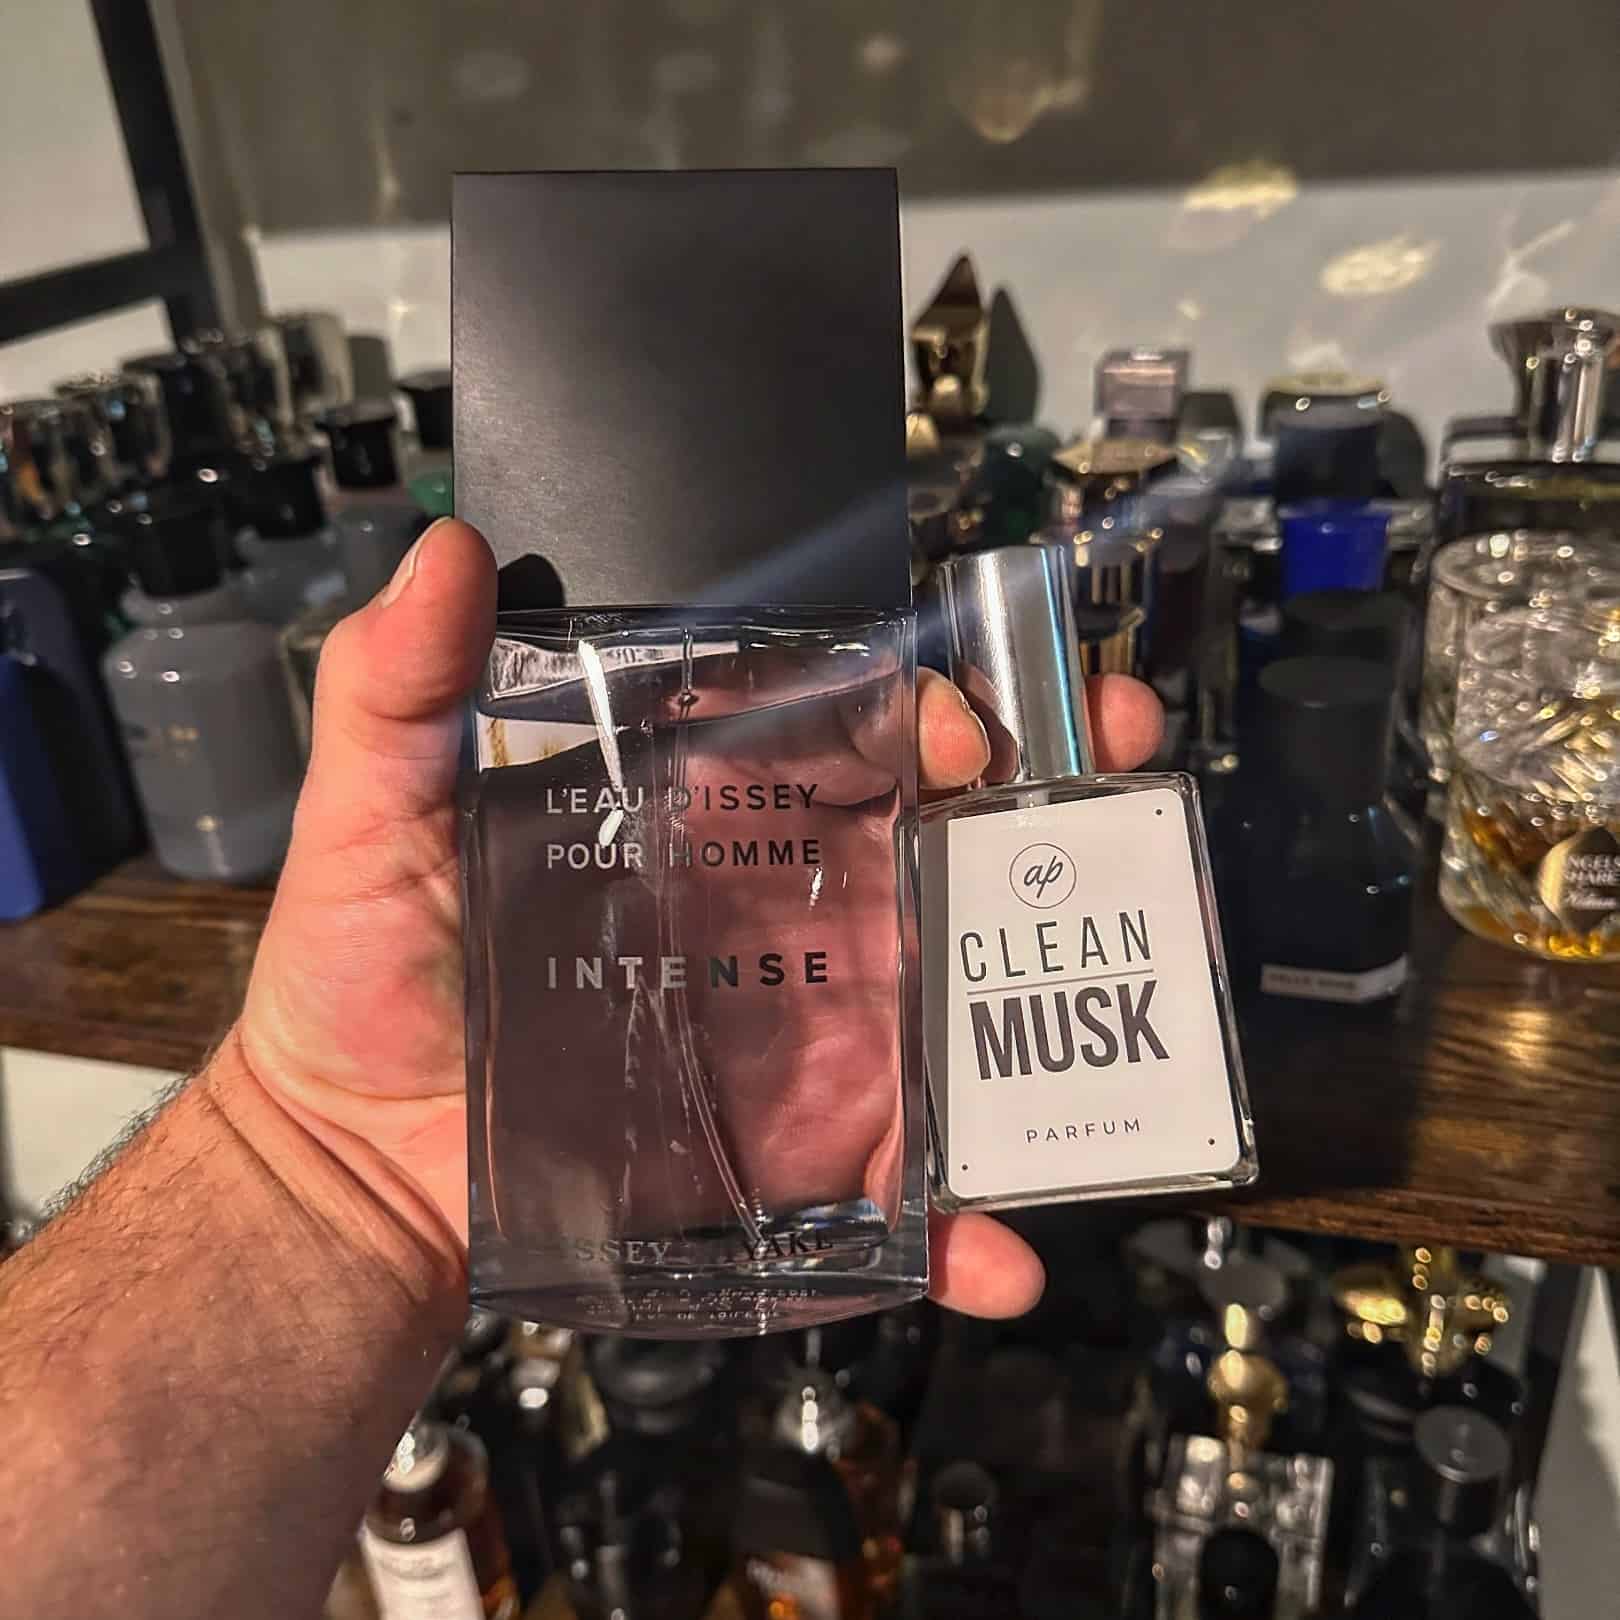 holding a bottle of l'eau d'issey pour homme intense and clean musk parfum